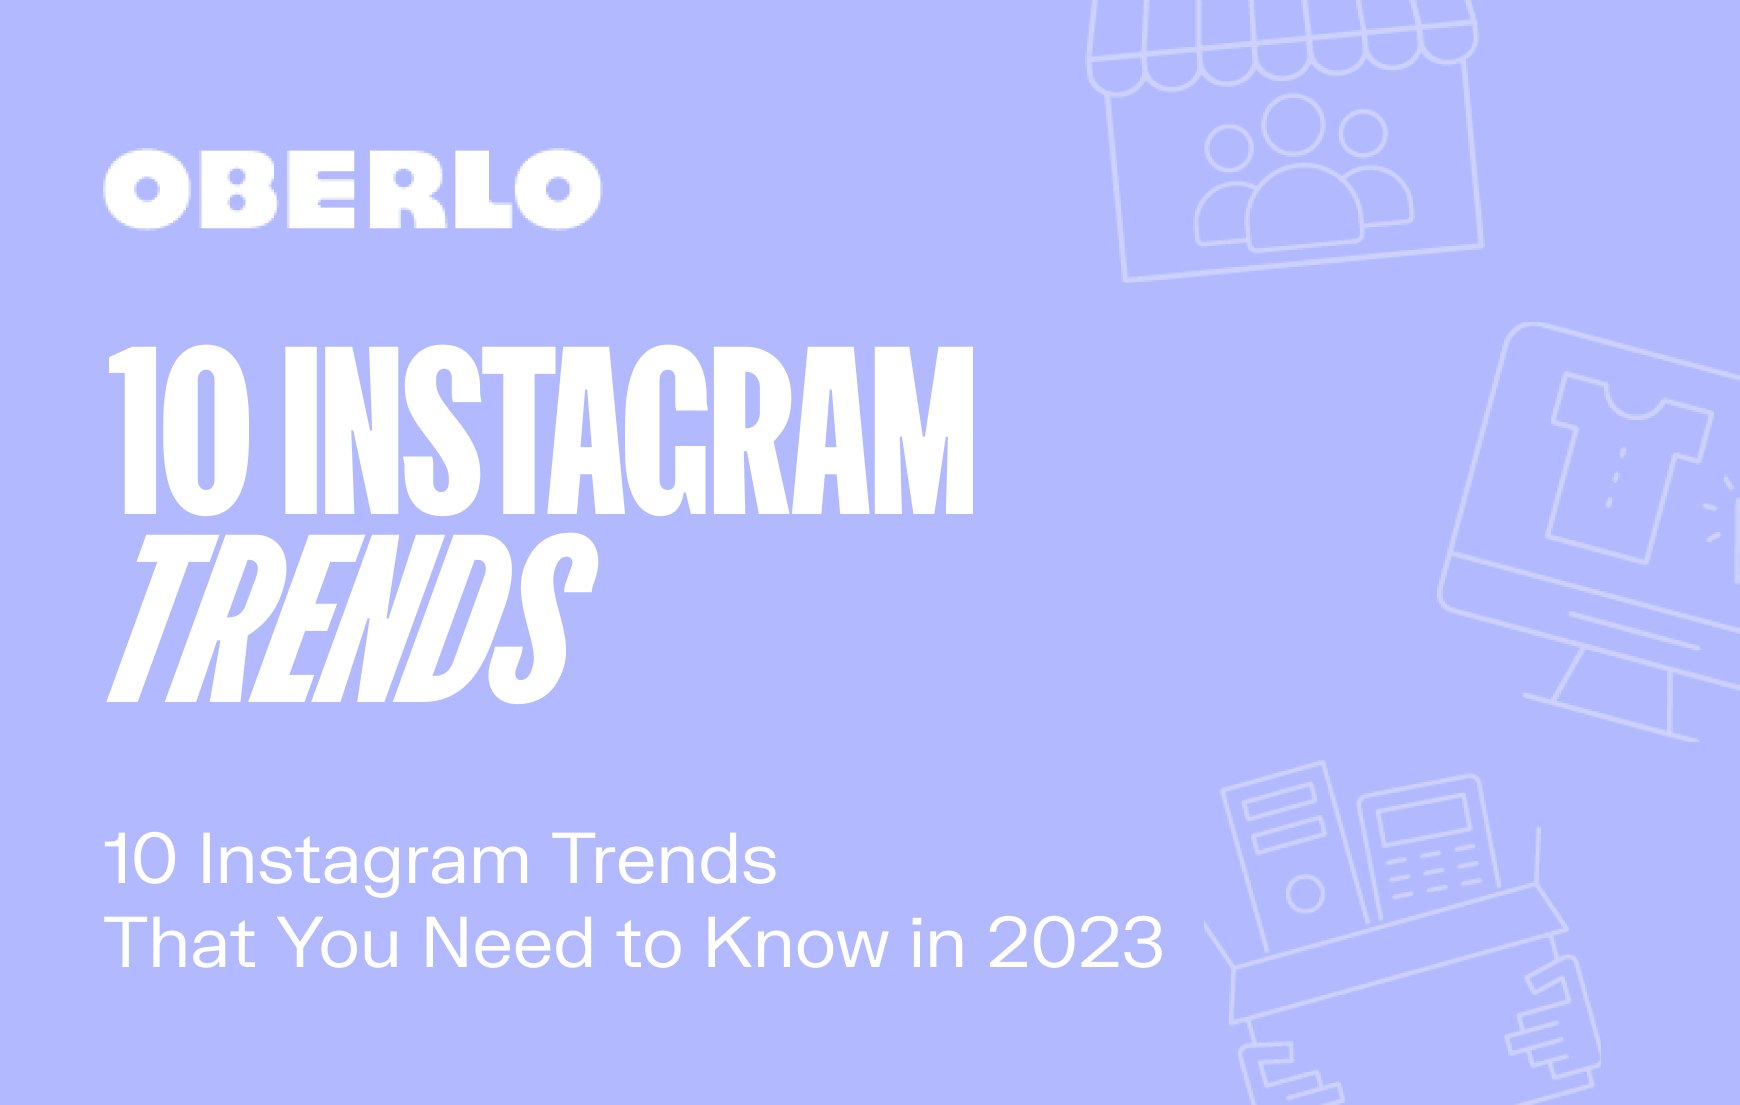 Instagram trends header image